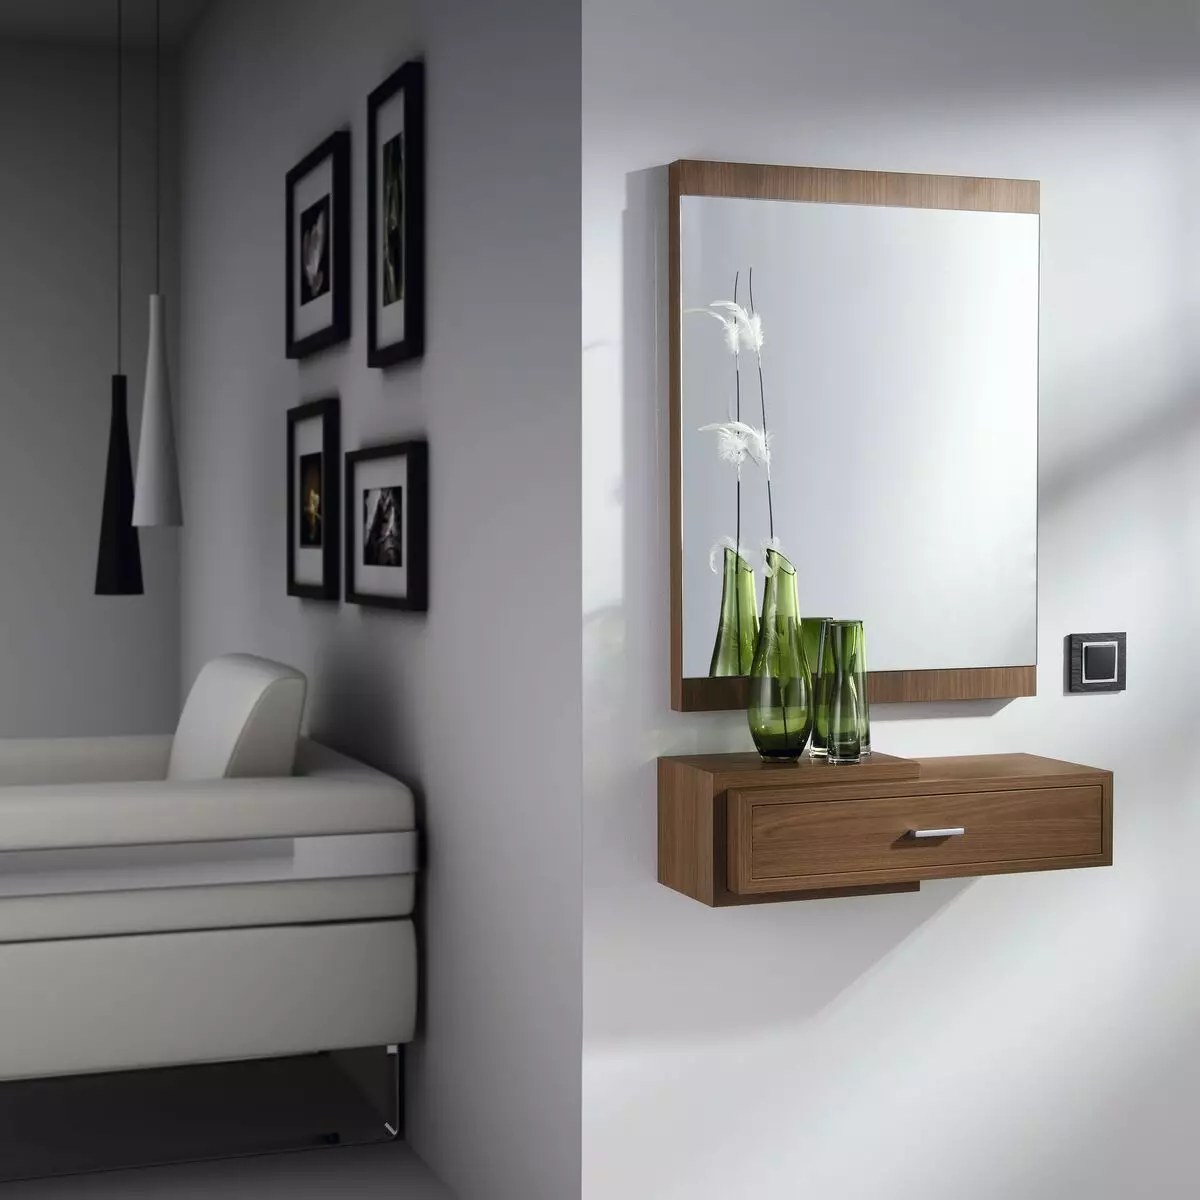 Cermin dengan rak di lorong: dinding dan lantai cermin. Bagaimana cara memilih cermin yang dipasang atau lainnya dengan rak? 9300_16